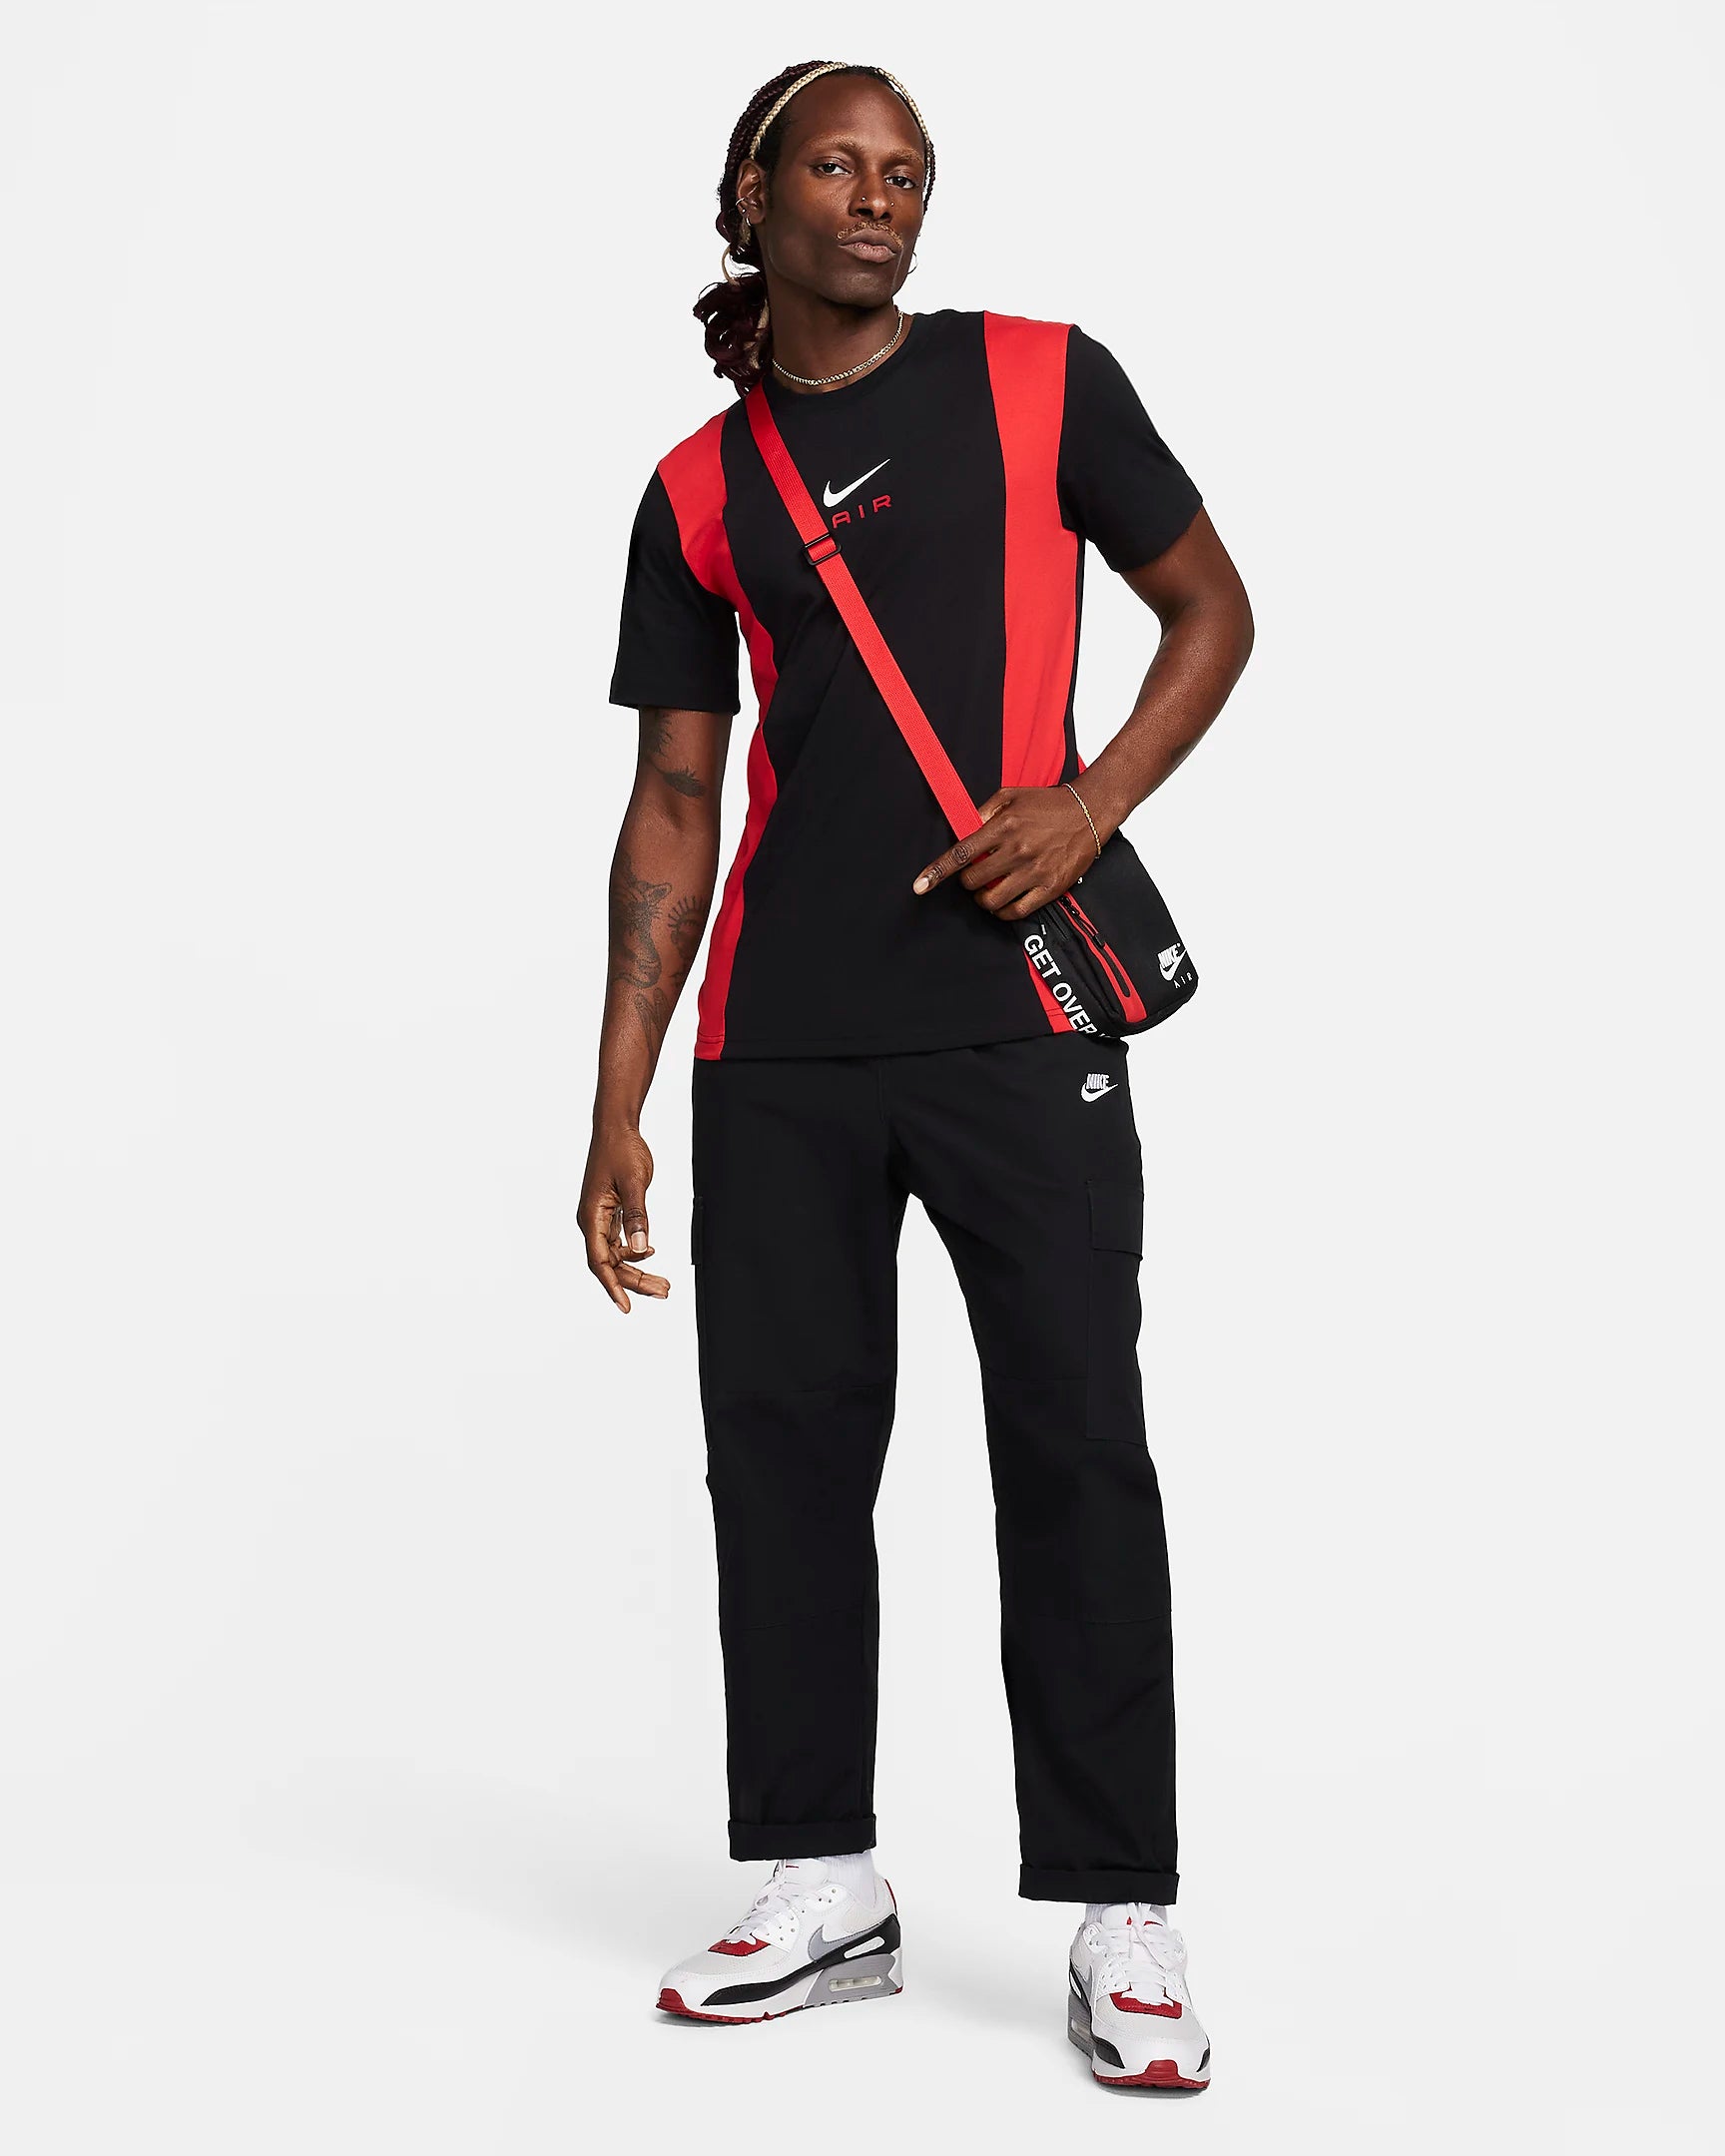 Nike Air Men's Short-Sleeve Top